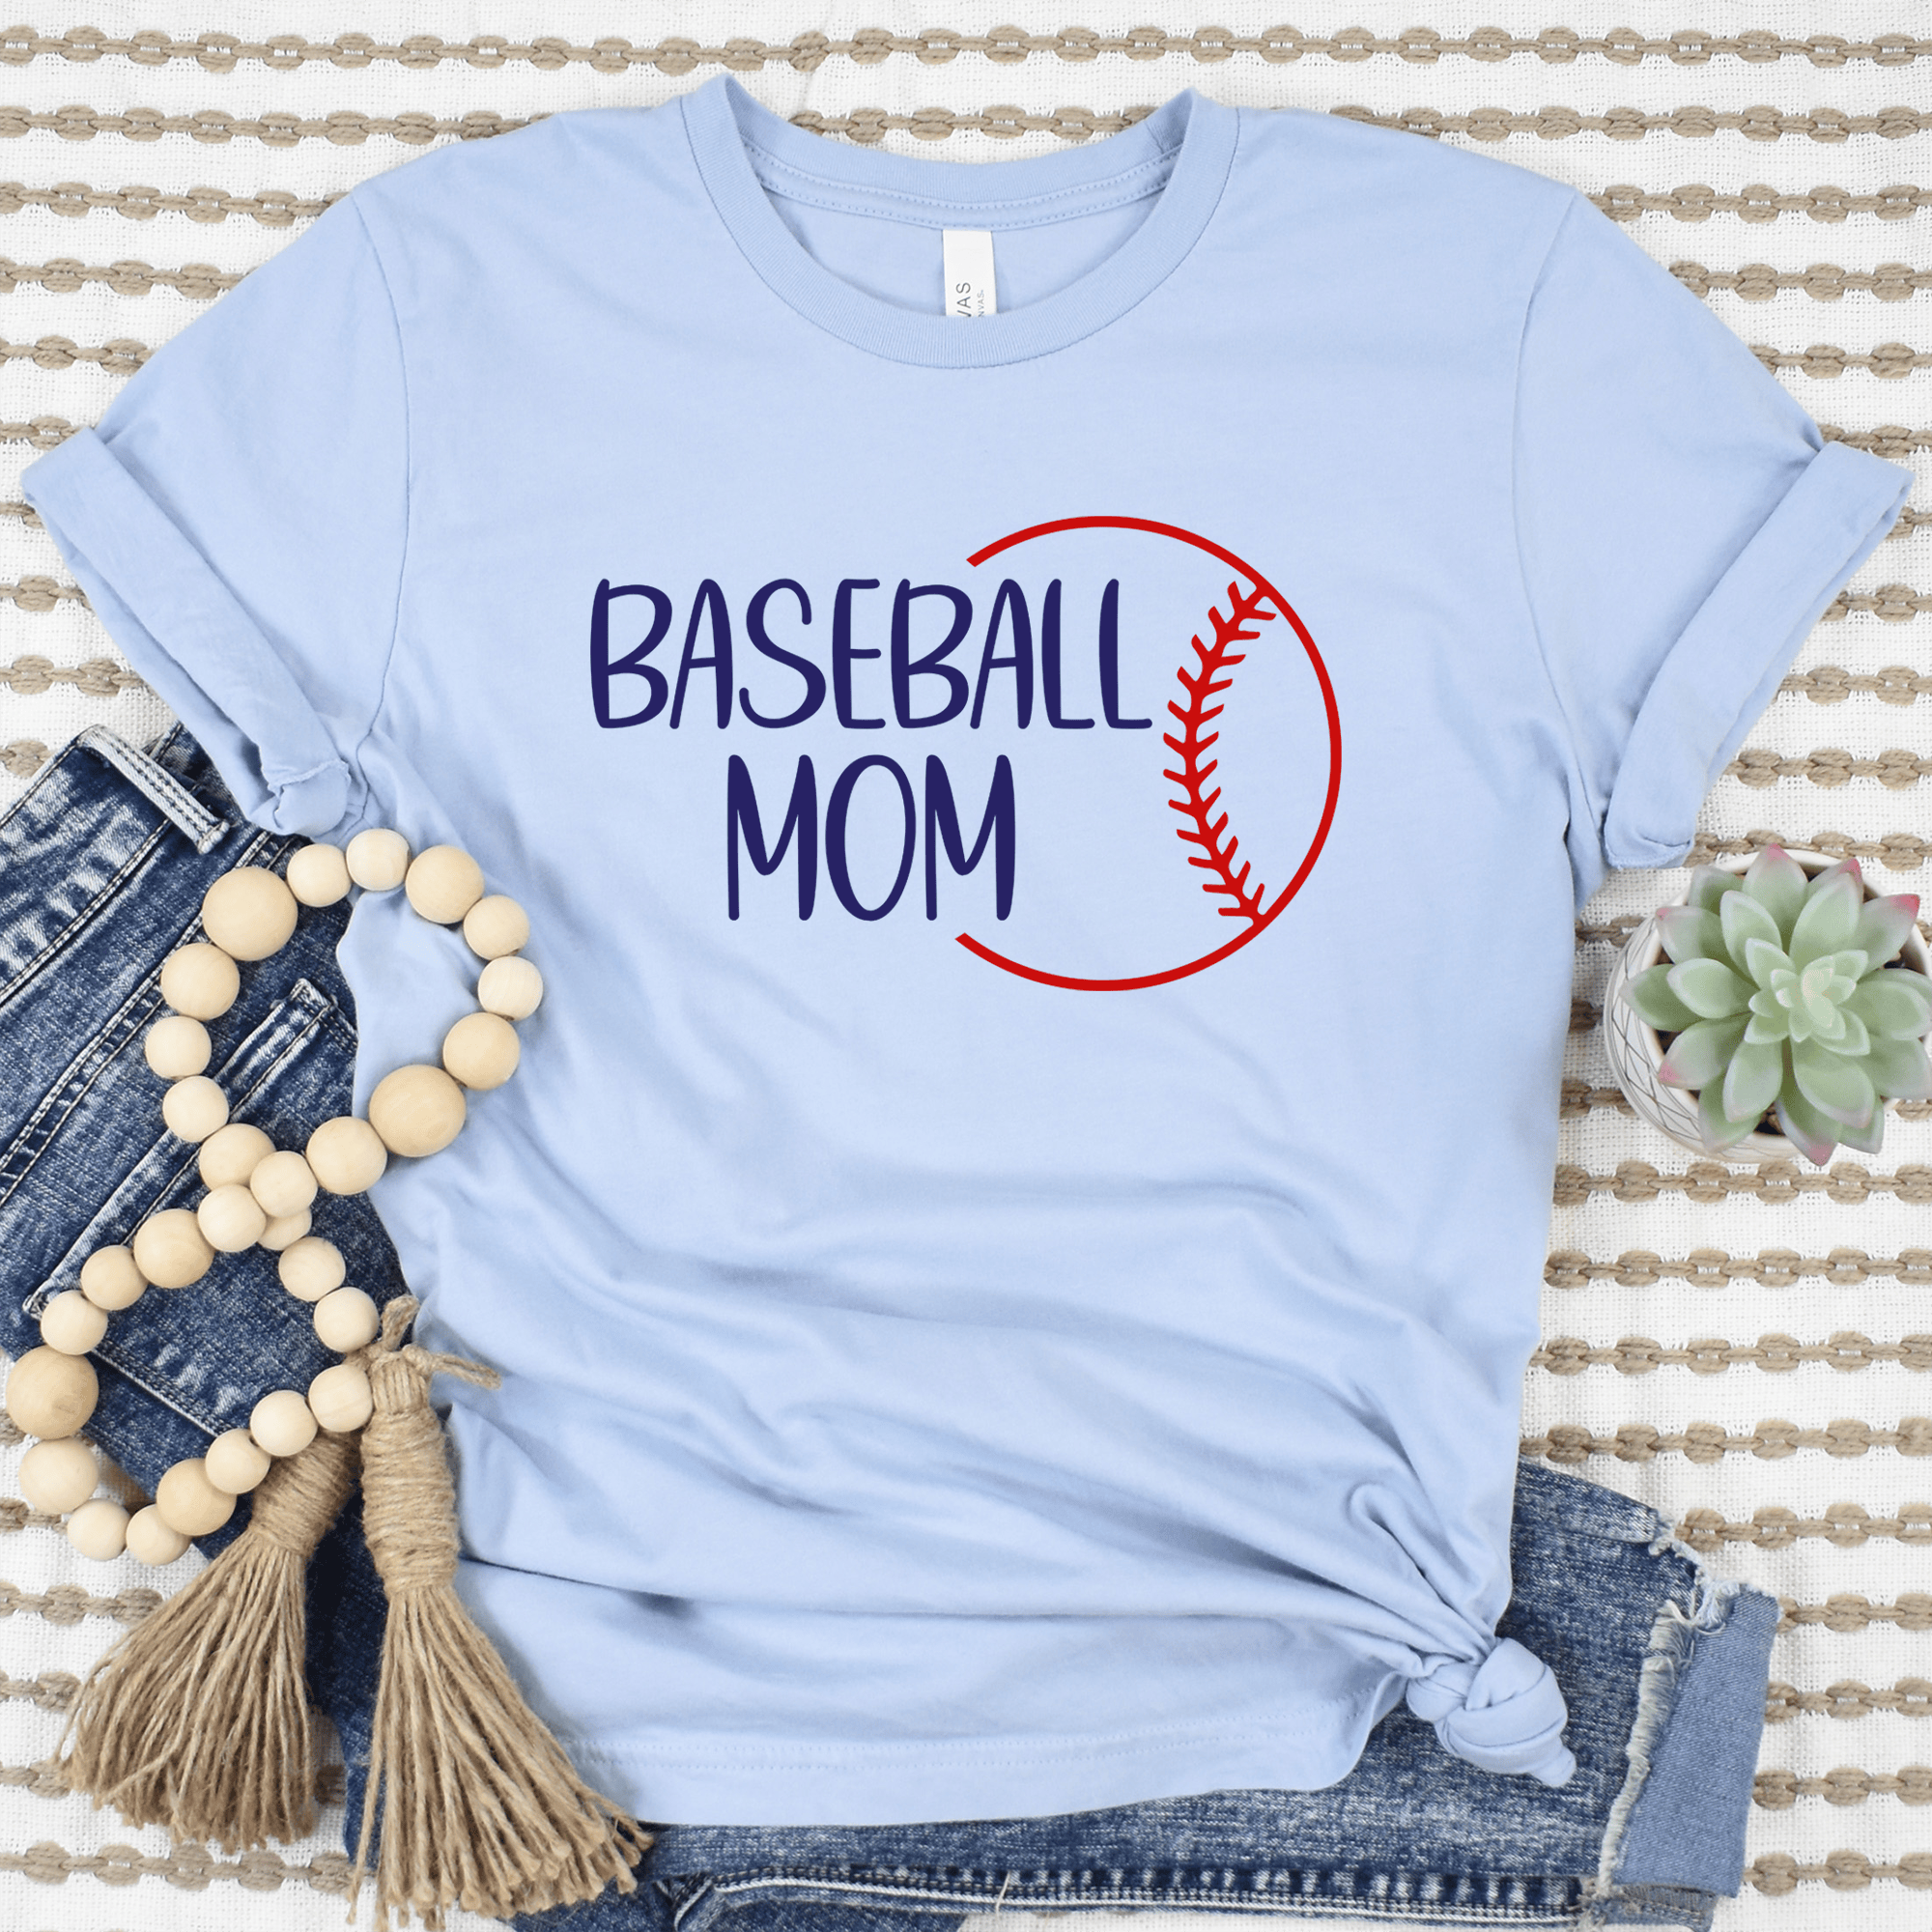 Womens Light Blue T Shirt with Sassy-Baseball-Mom design